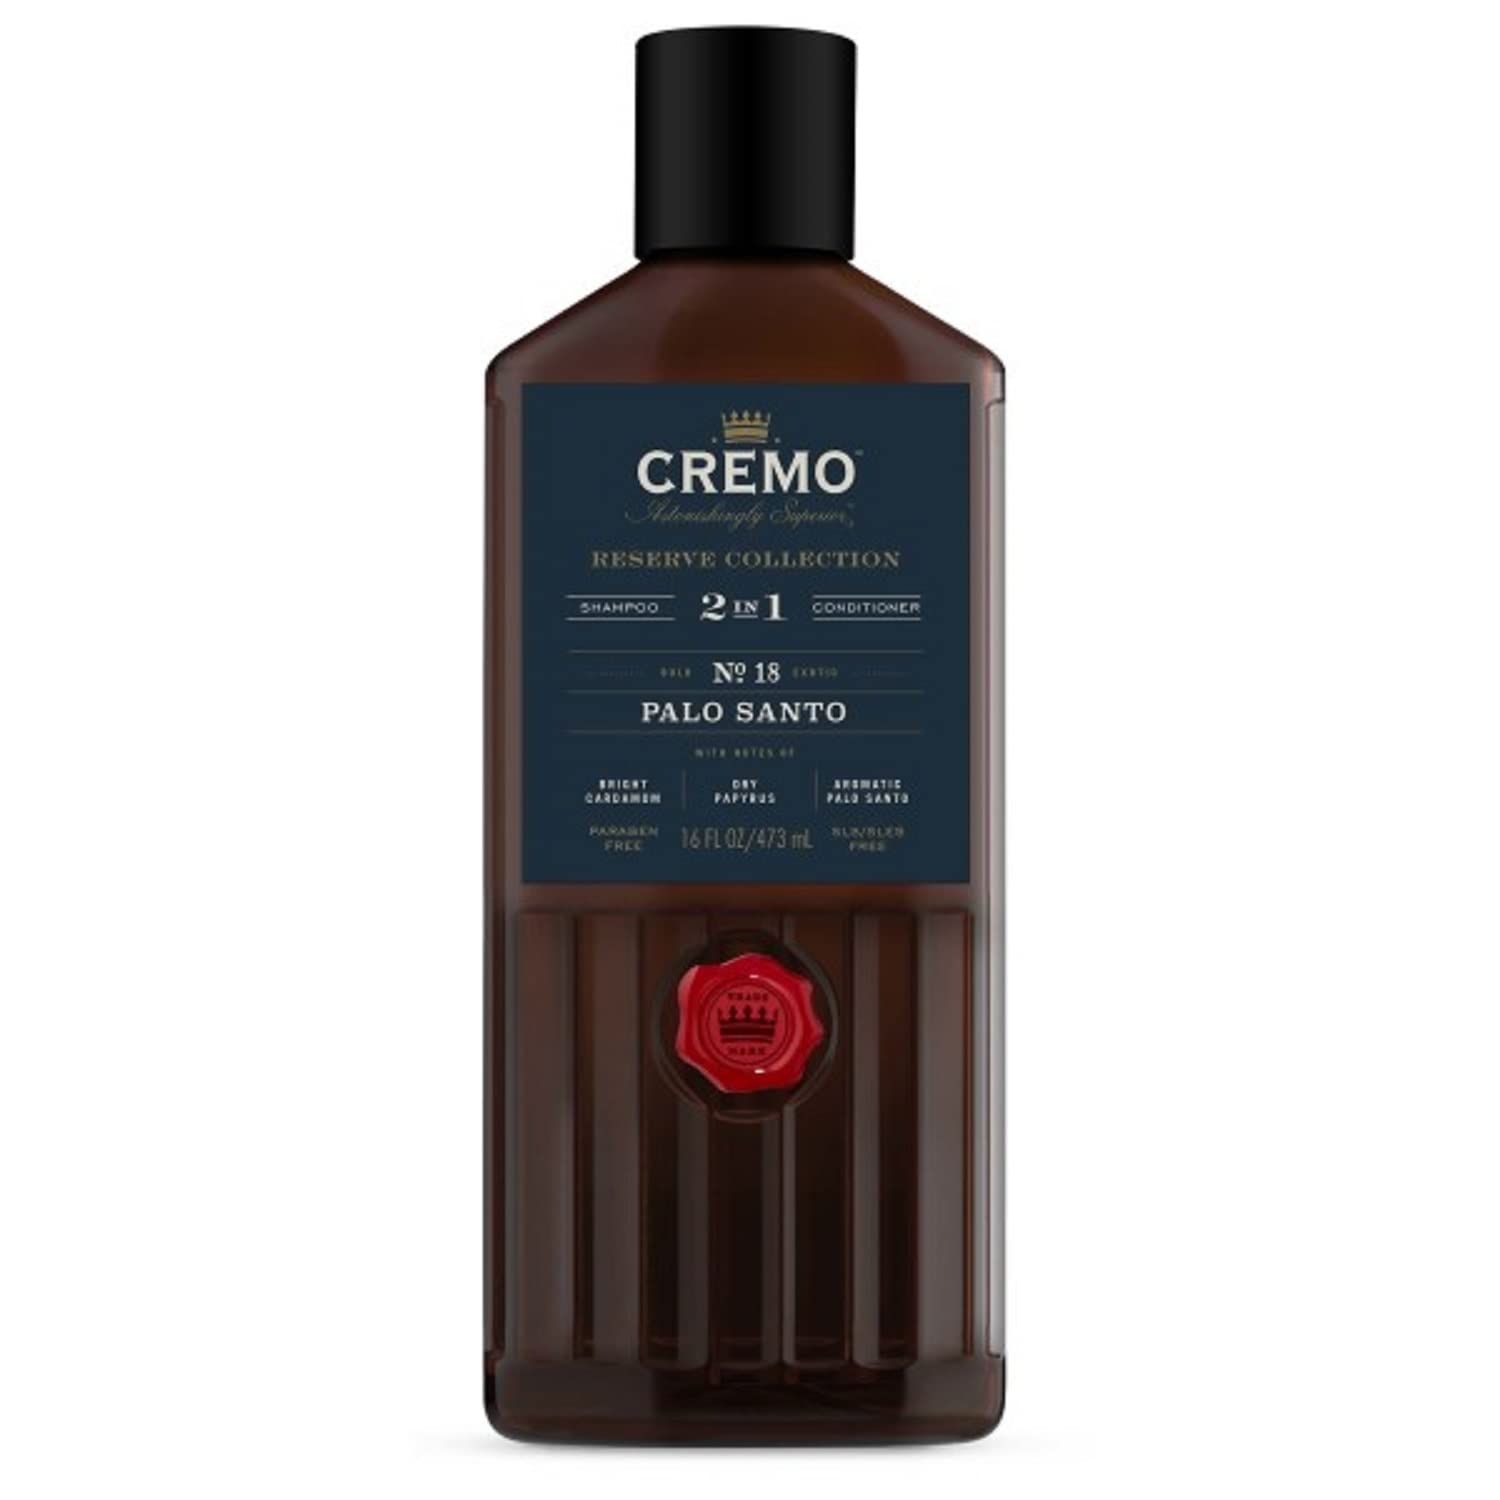 Cremo Palo Santo (Reserve Collection) Barber Grade 2-n-1 Shampoo & Conditioner, 16 Oz